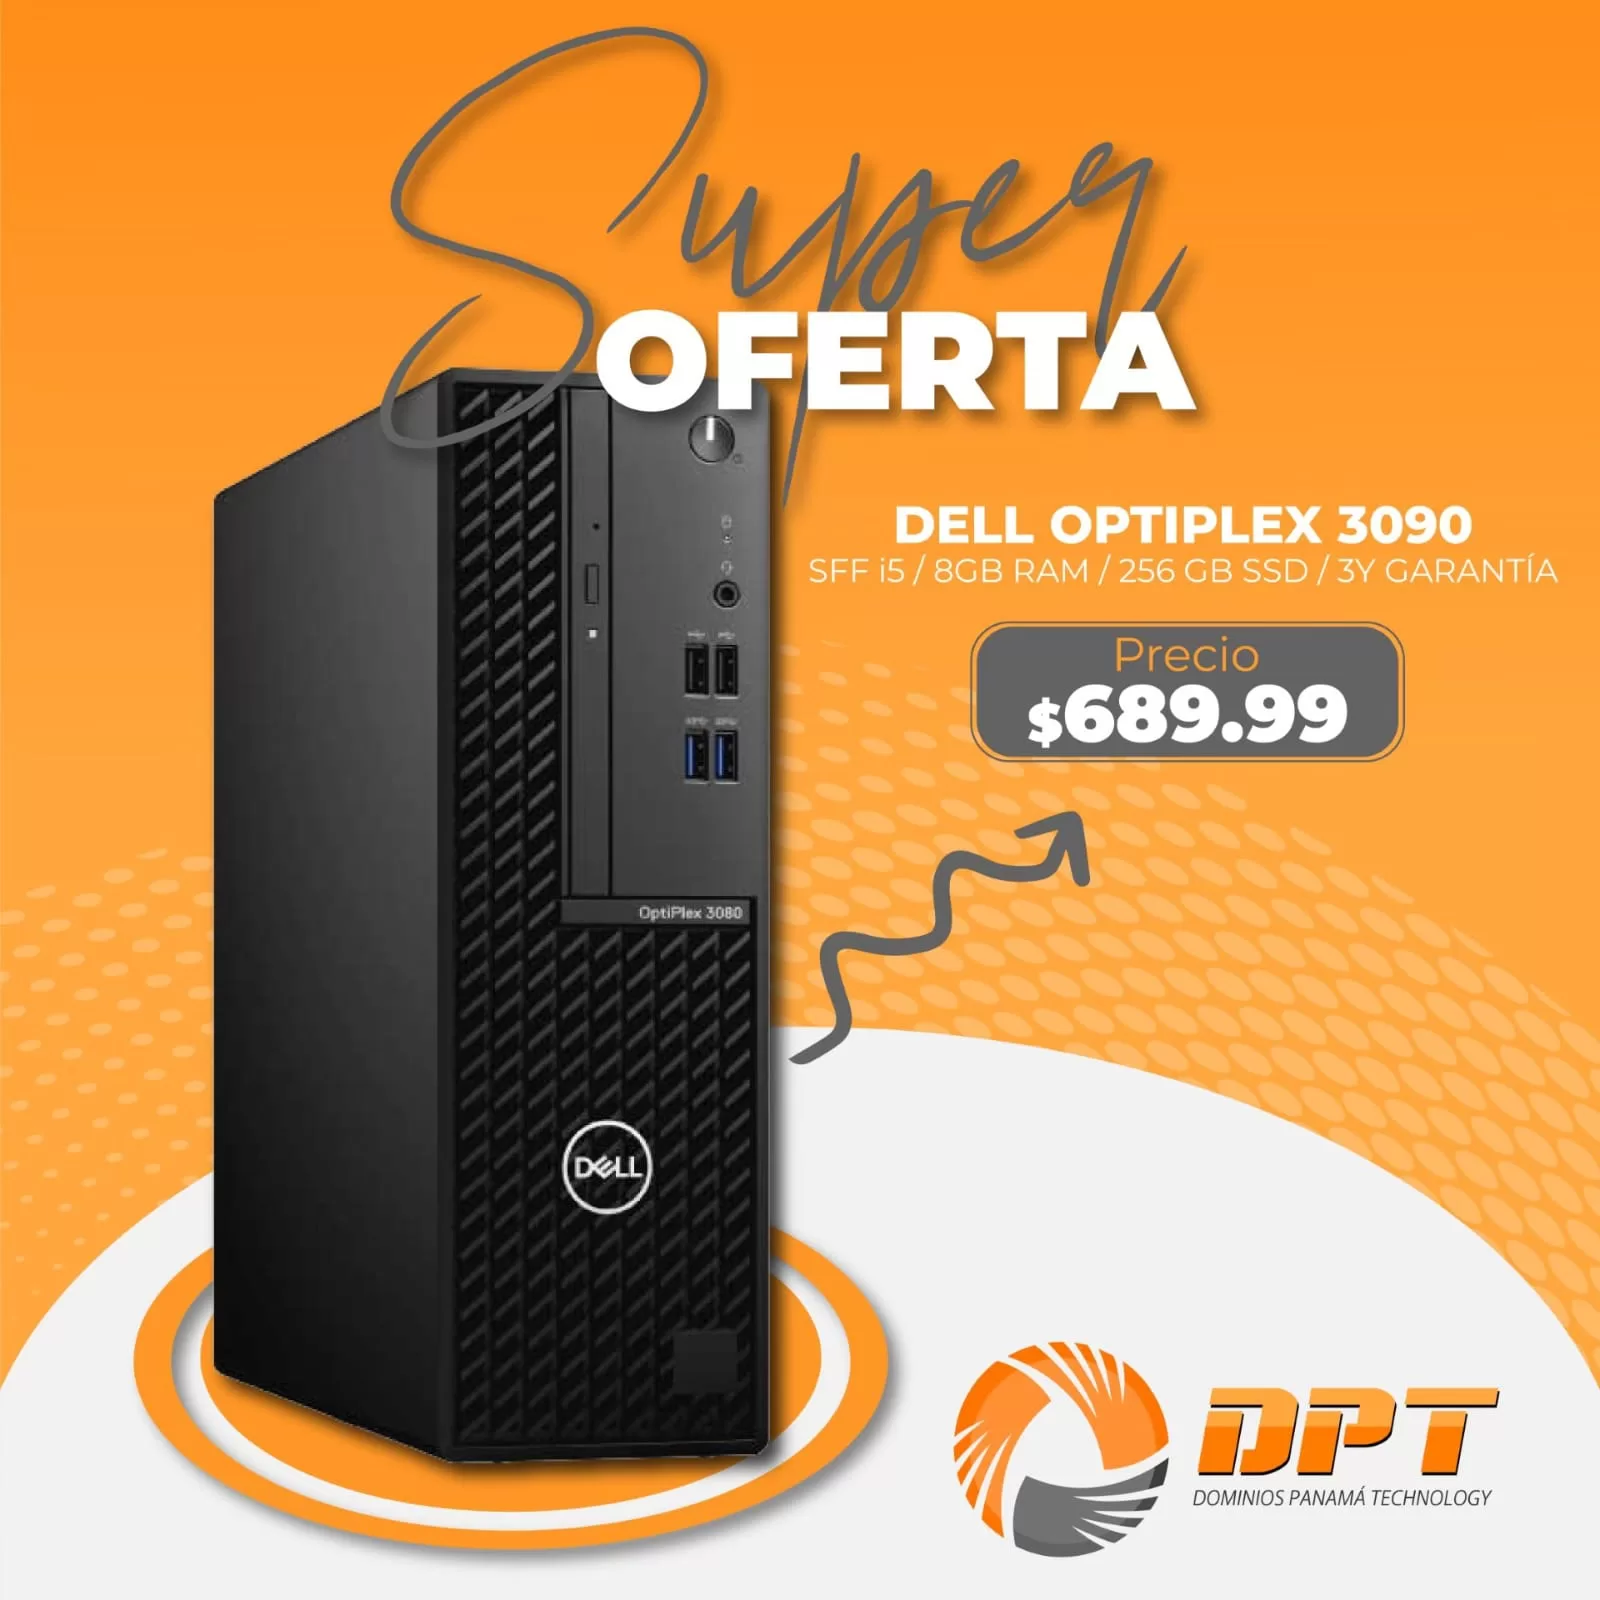 Dell optiplex 330 super oferta.